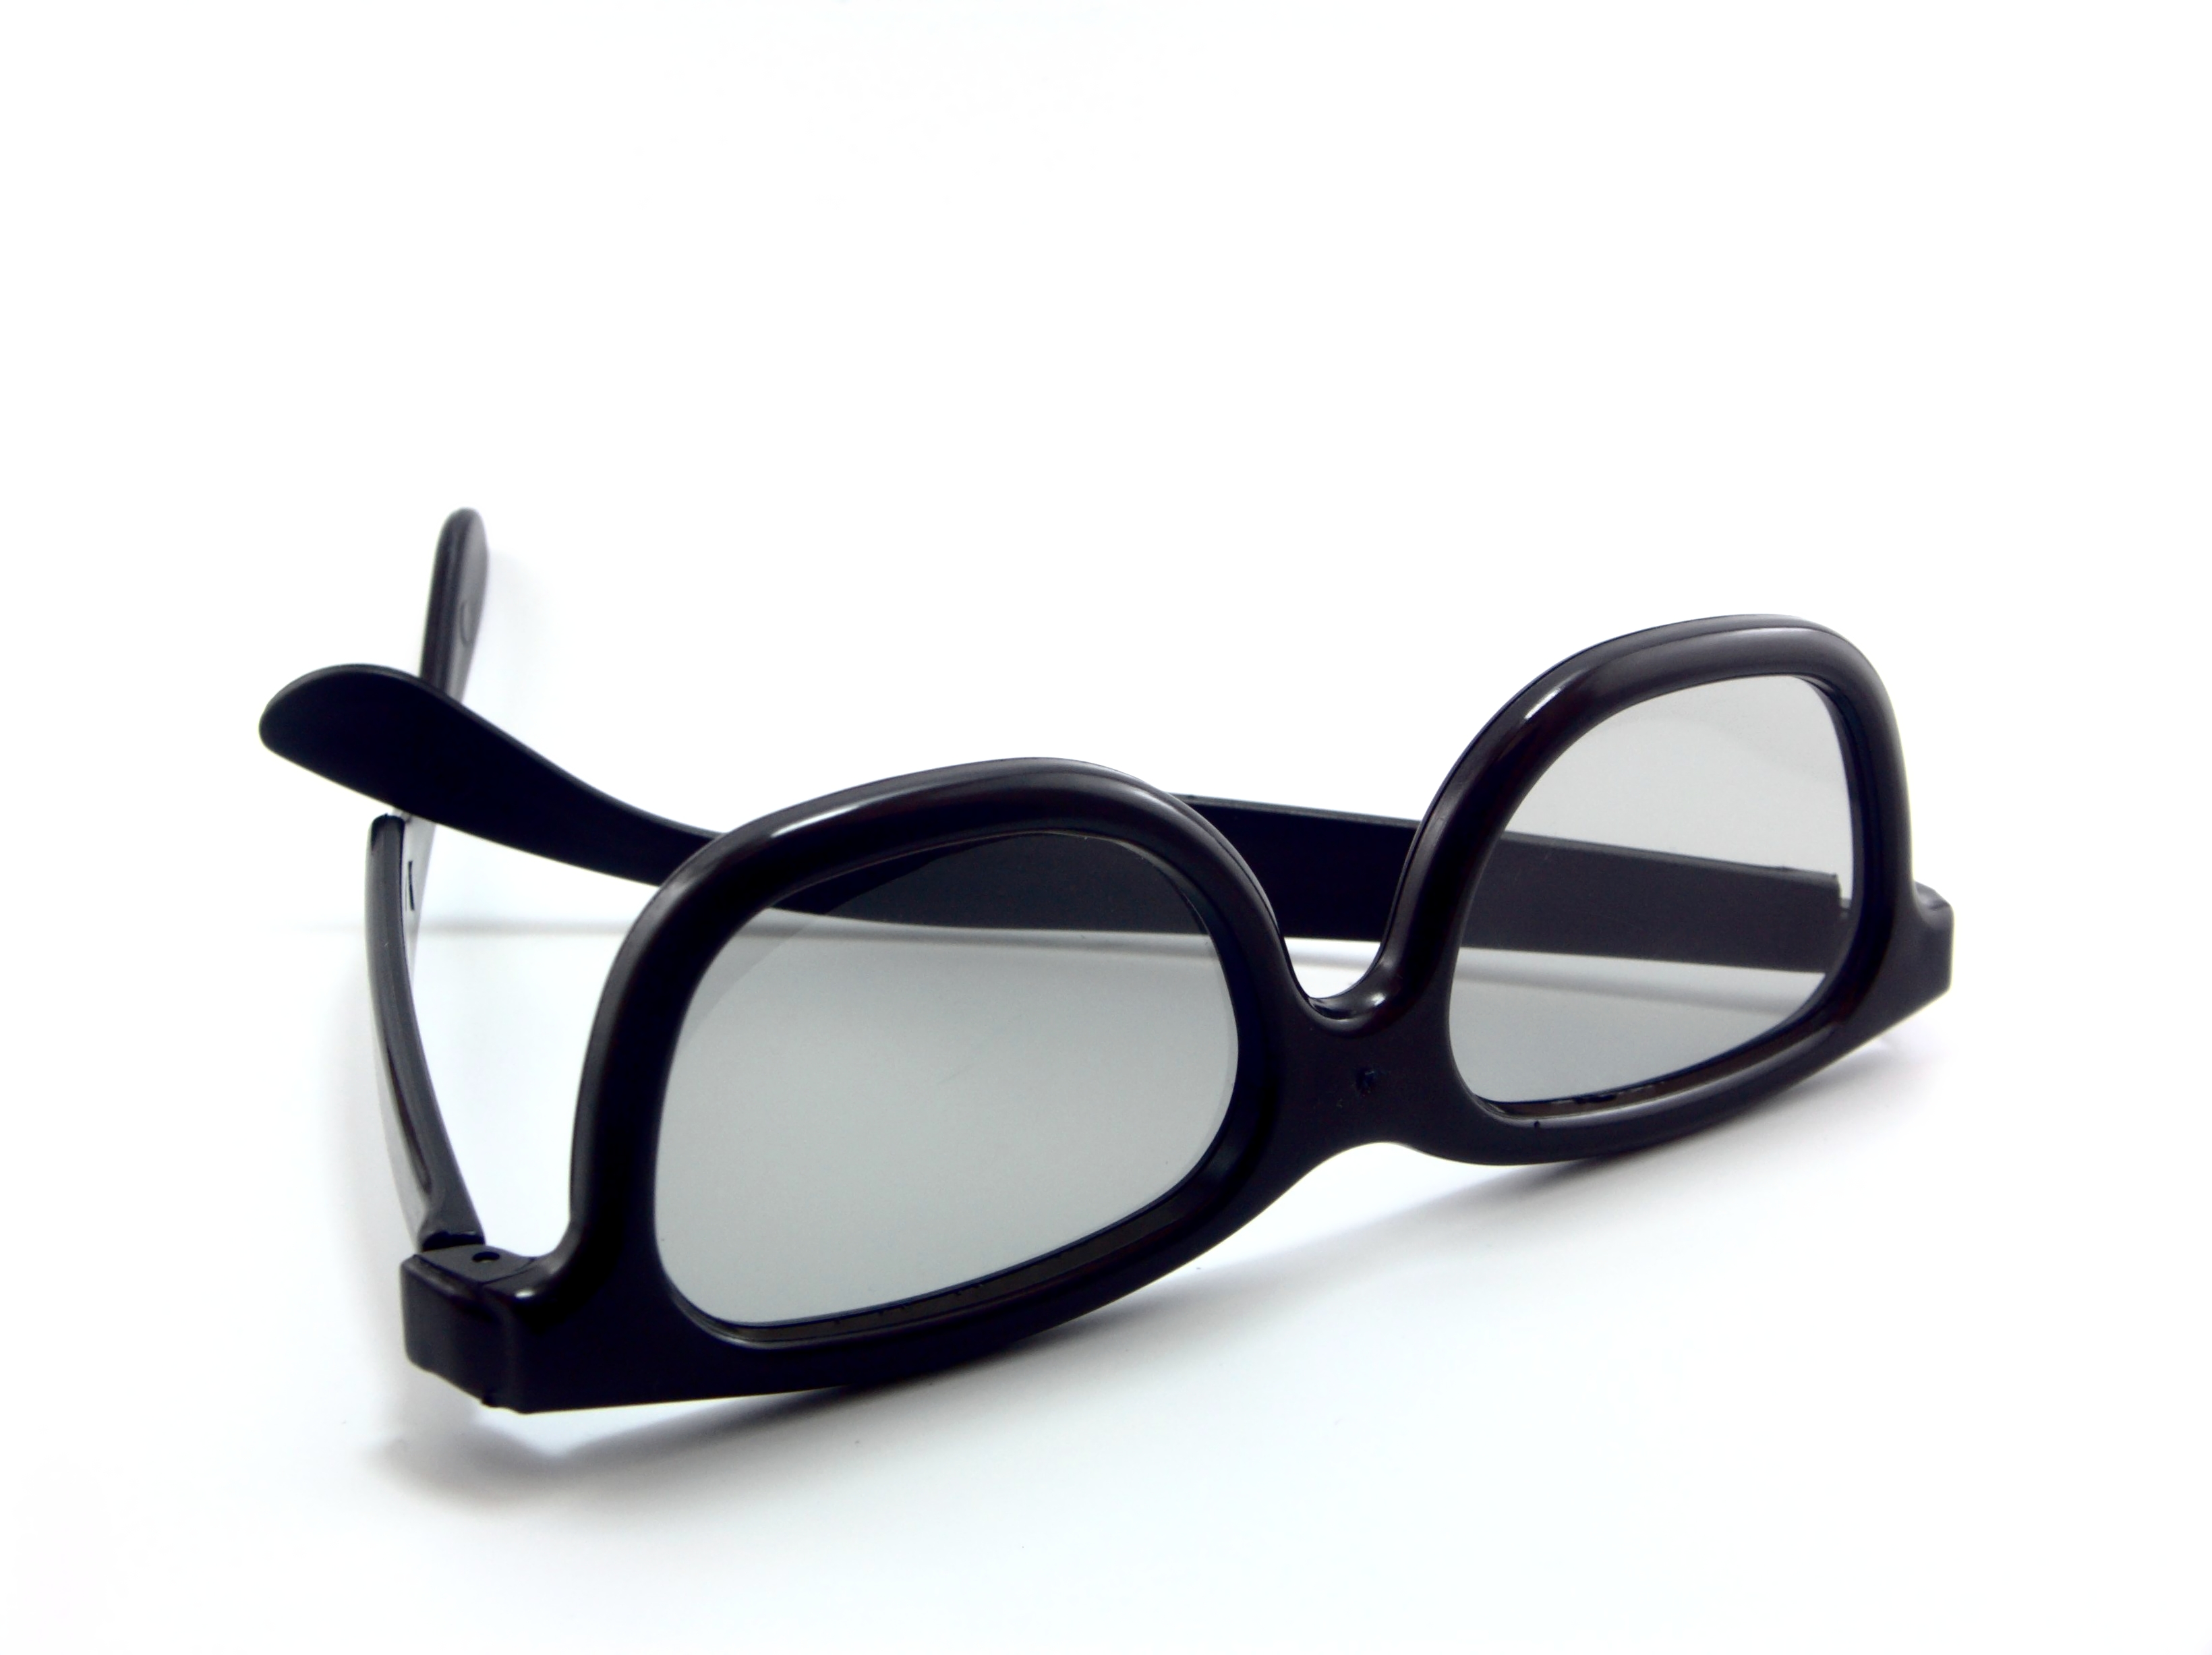 Free photo: Retro sunglasses - Accessory, Shades, Modern - Free ...